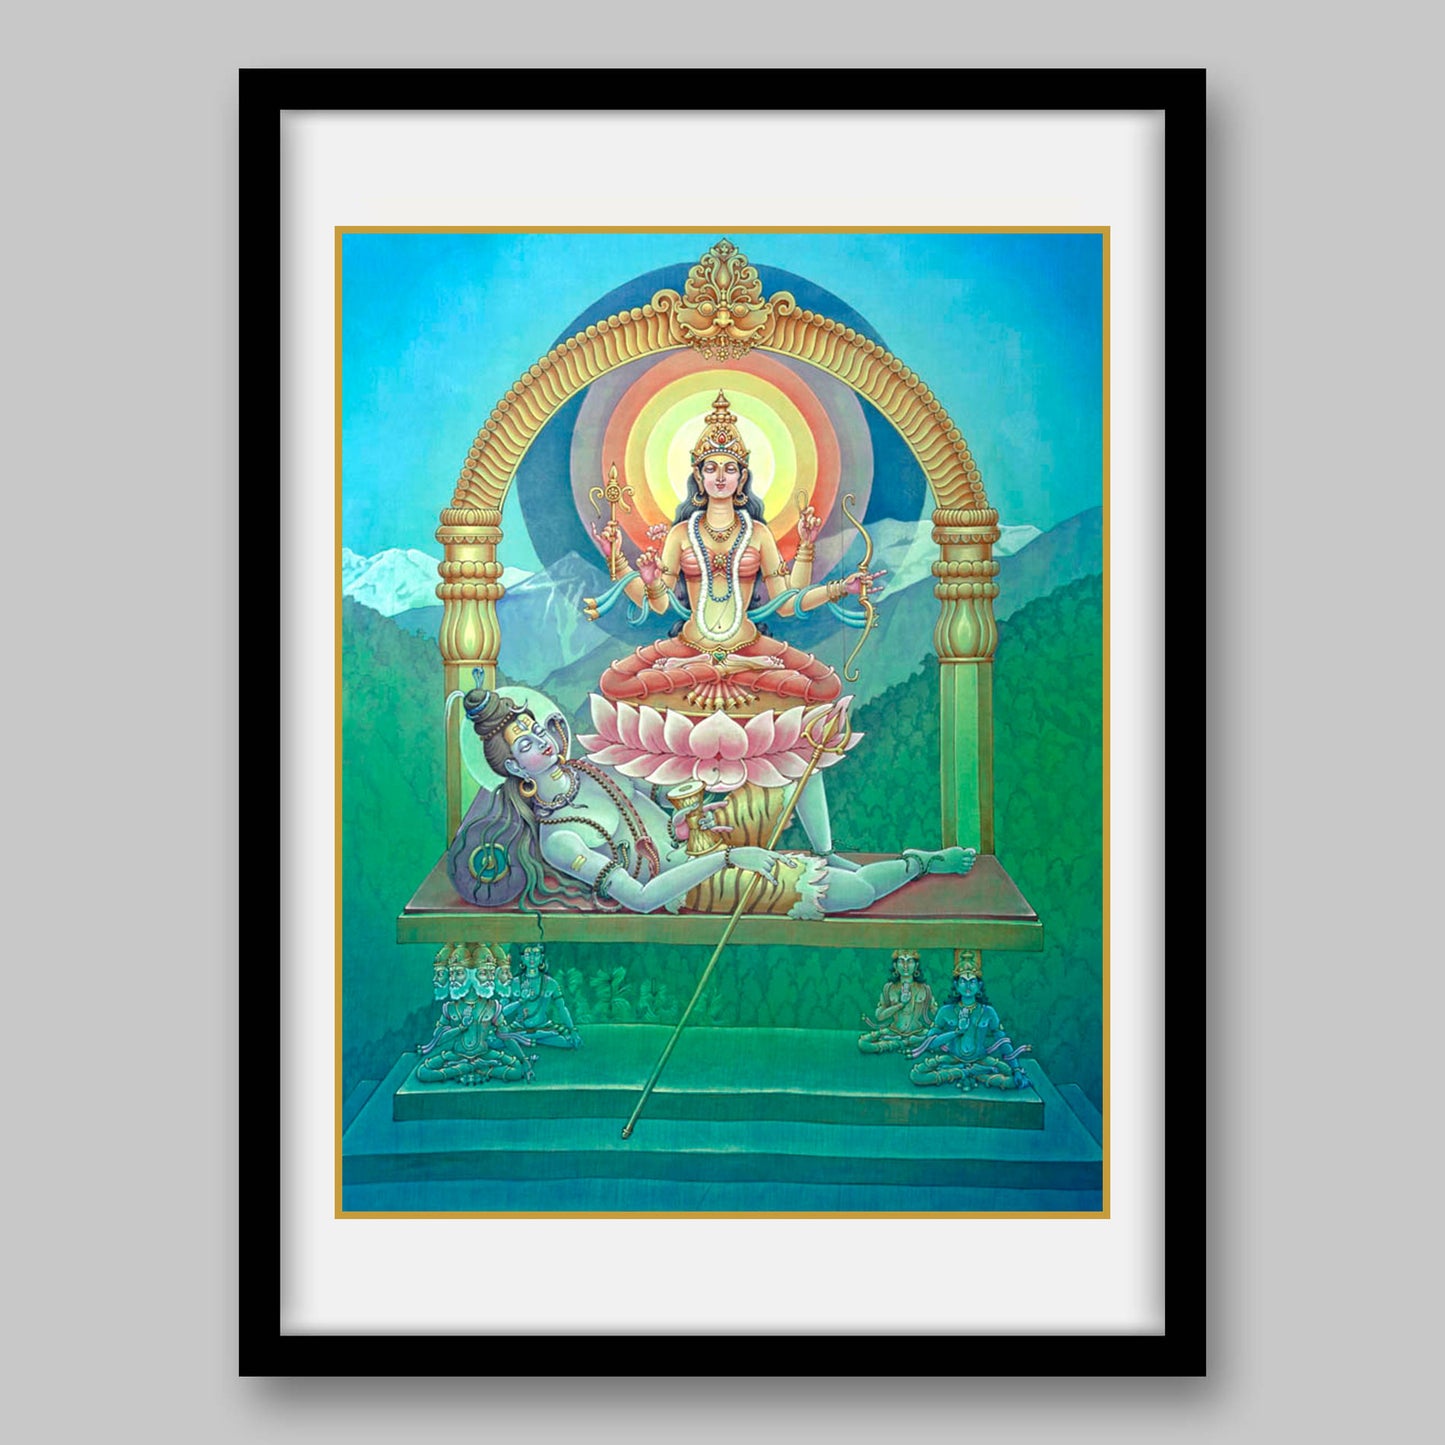 Tripura Sundari - High Quality Print of Artwork by Pieter Weltevrede